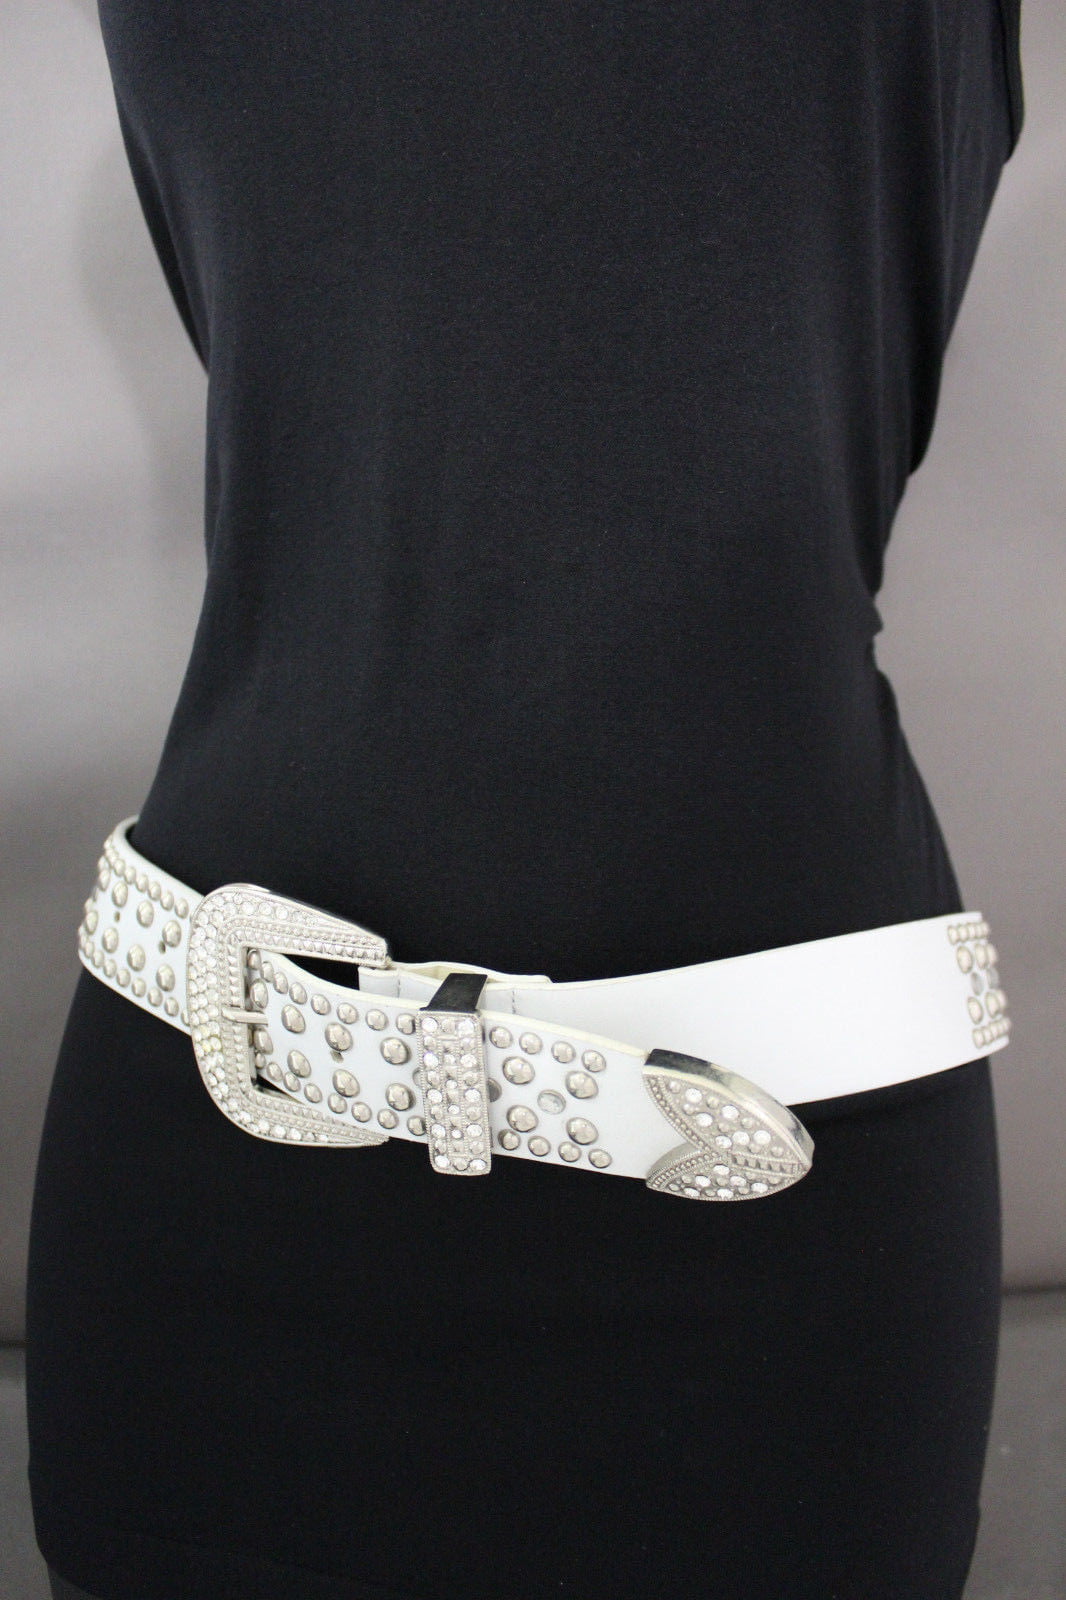 TFJ Women Teen Punk Rocker Fashion Fabric Belt Hip White Print Studs Black Color